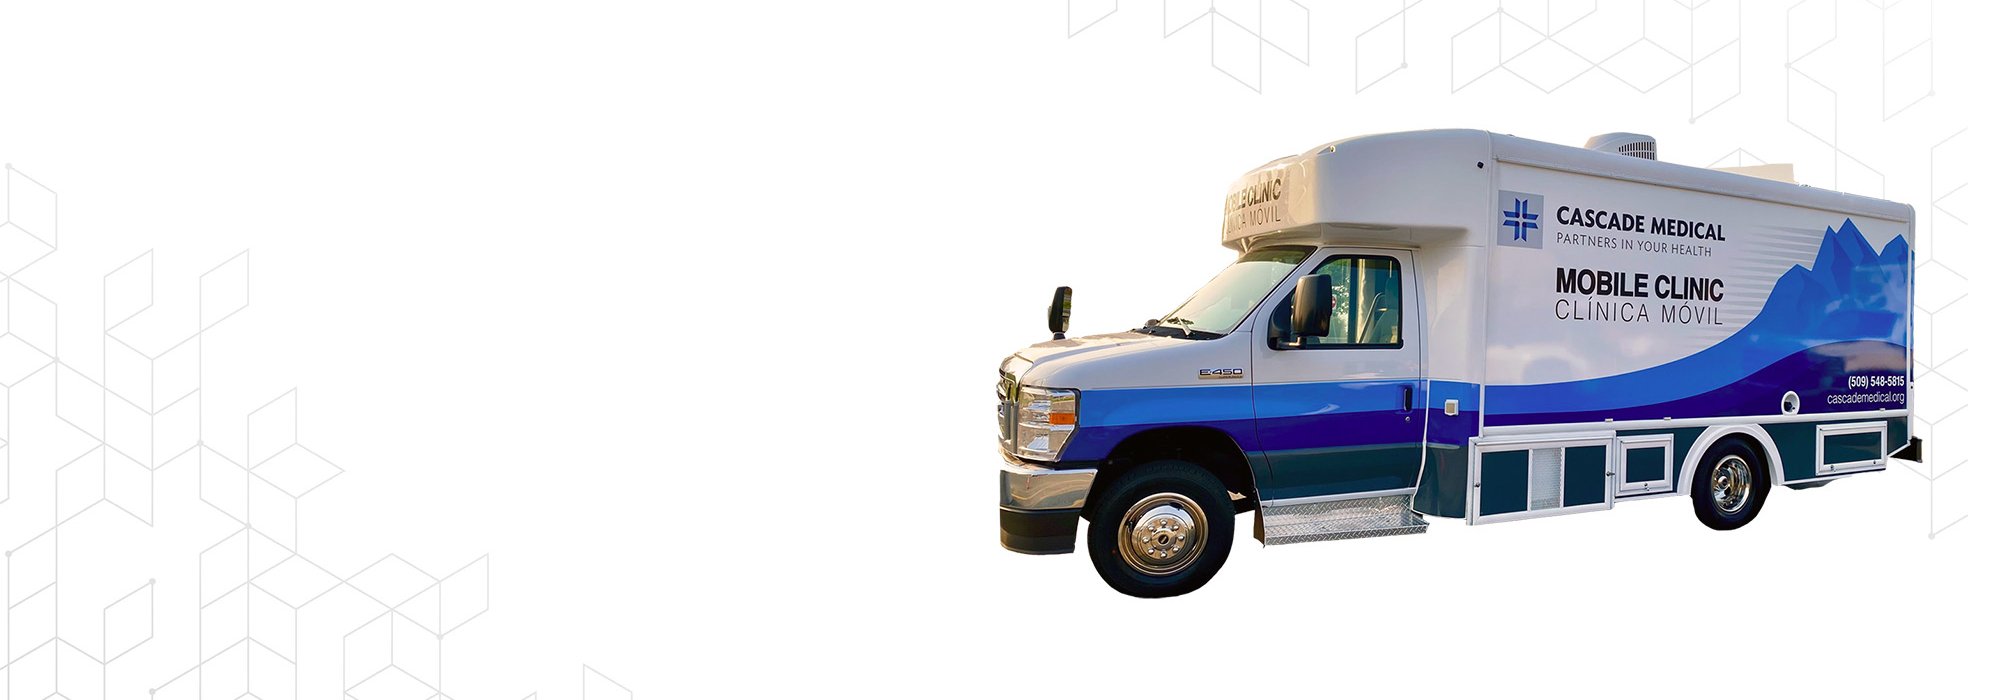 Photo of Cascade Medical Mobile Clinic van